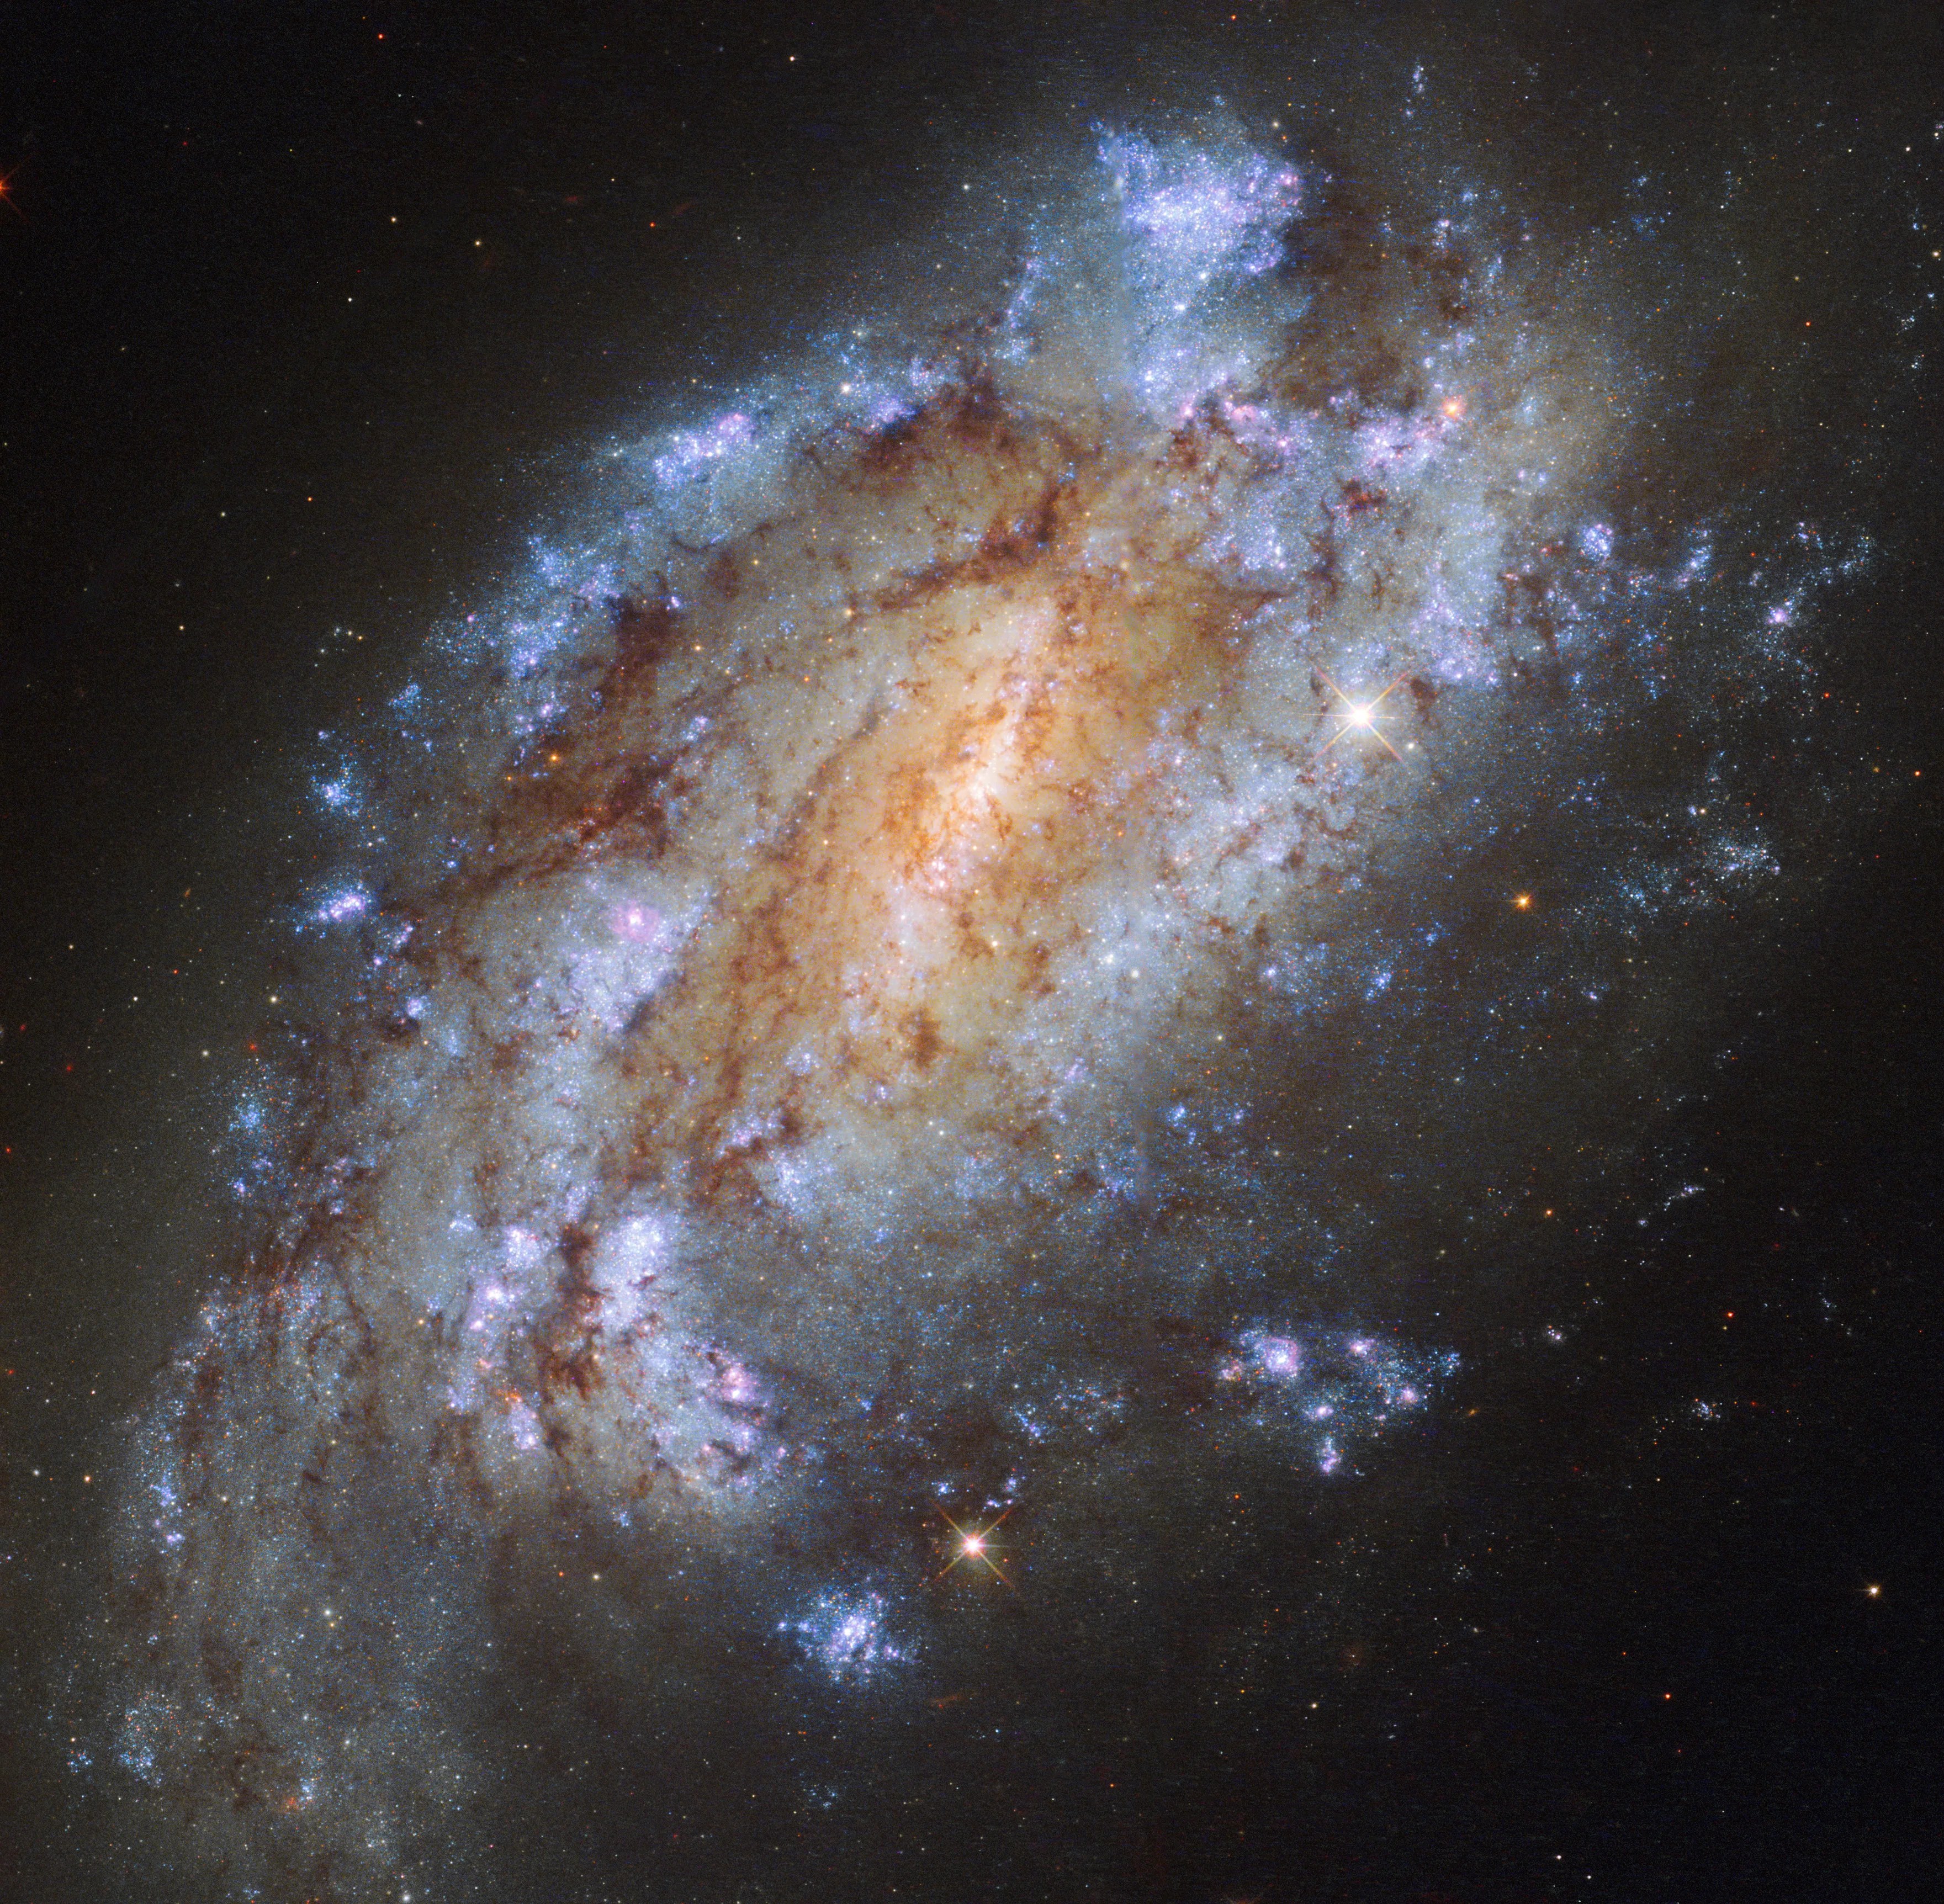 A bright, ragged spiral galaxy